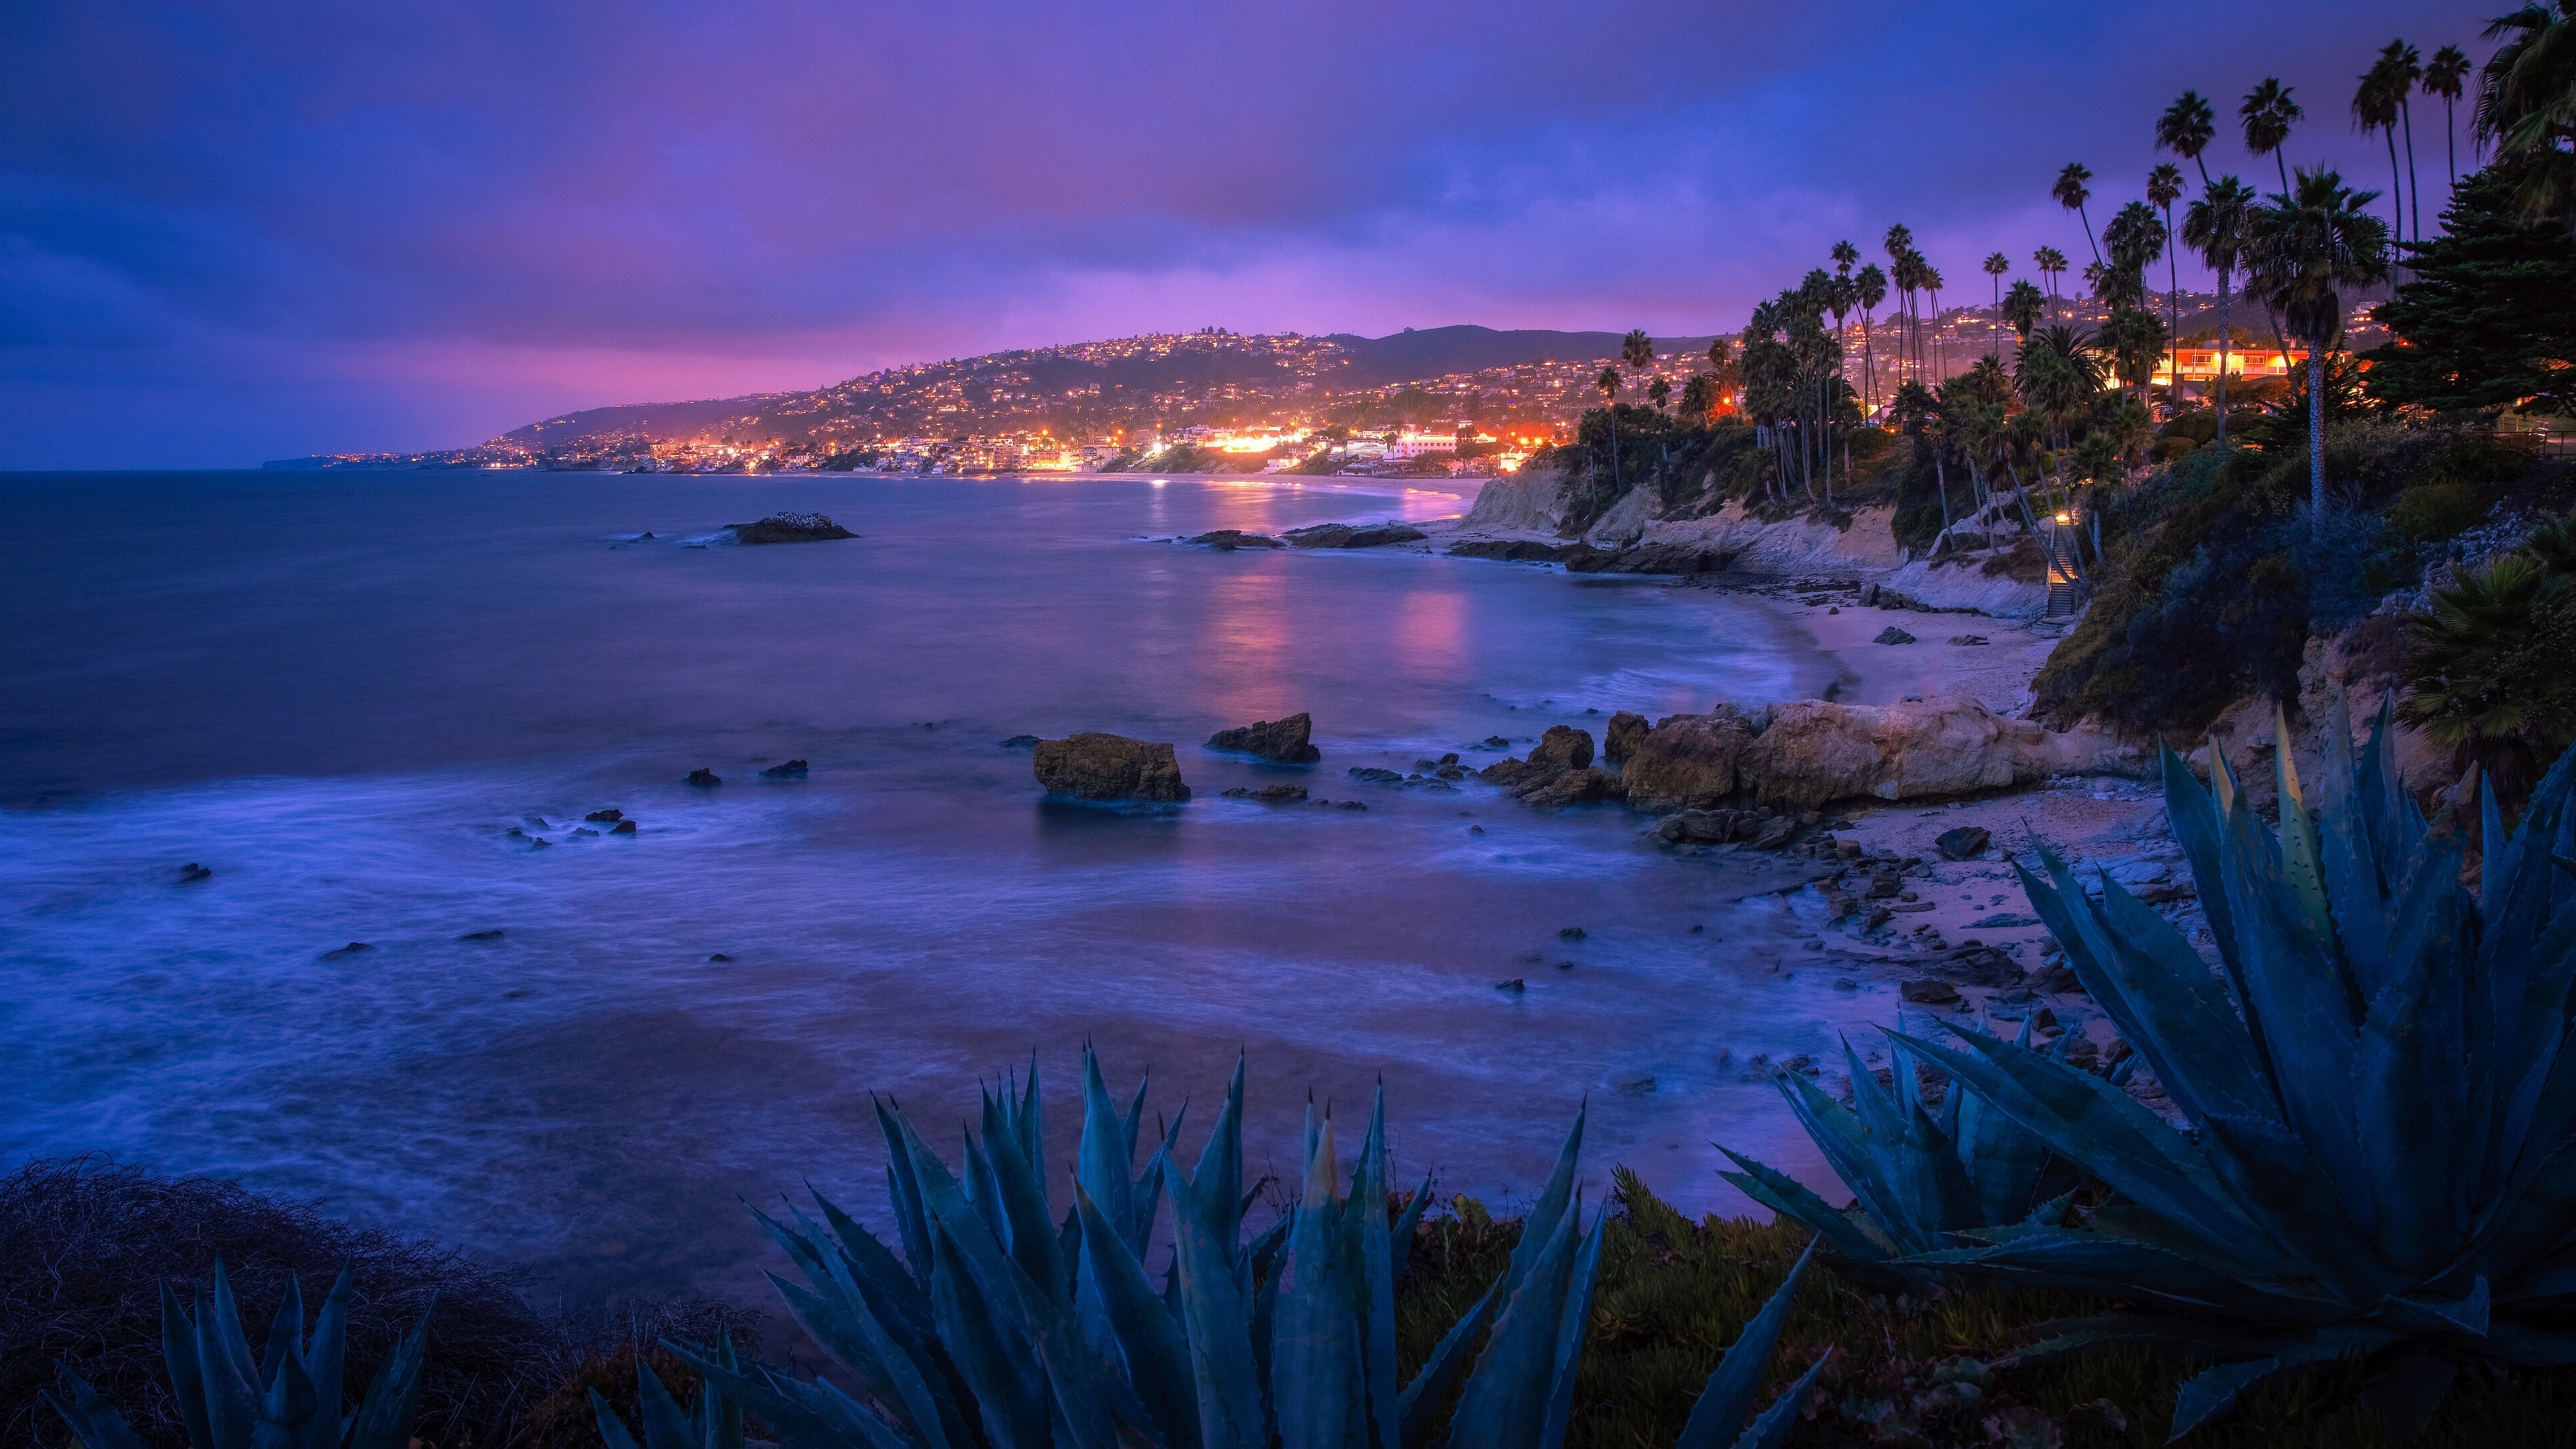 Laguna Beach wallpaper, Dawn in California, Night lights scenery, Relaxing coastal vibe, 3840x2160 4K Desktop